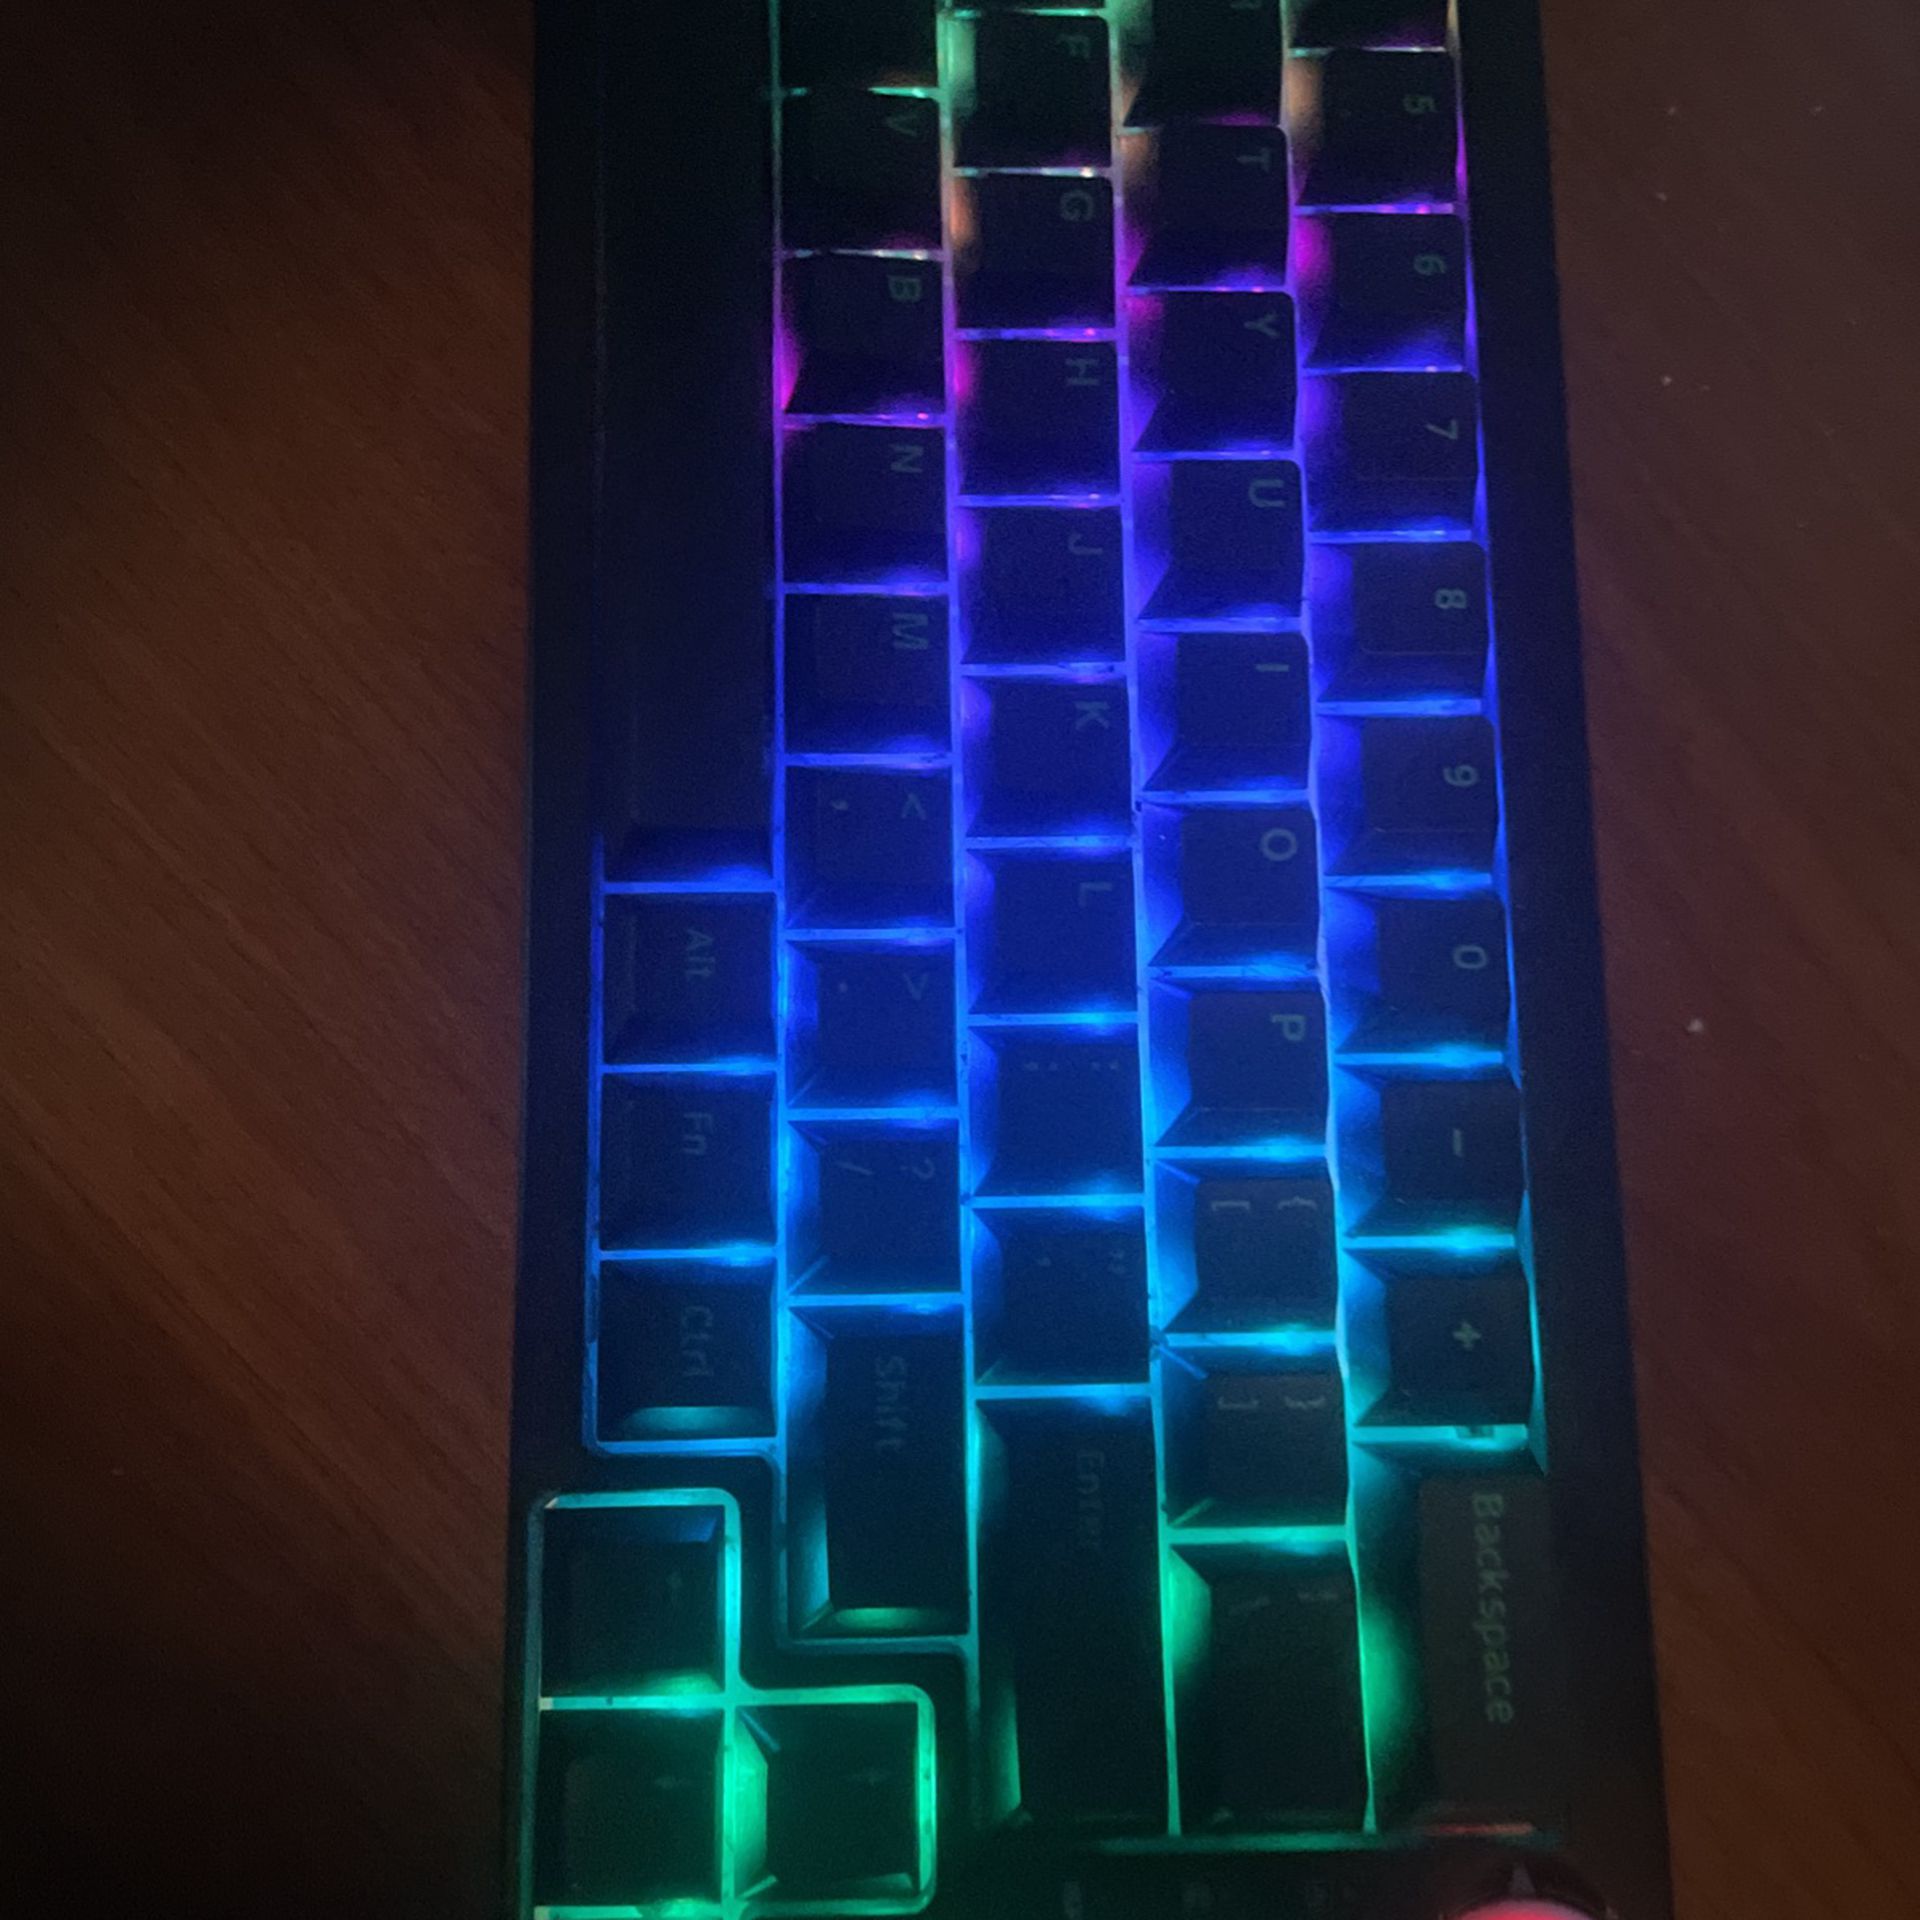 Custom built keyboard